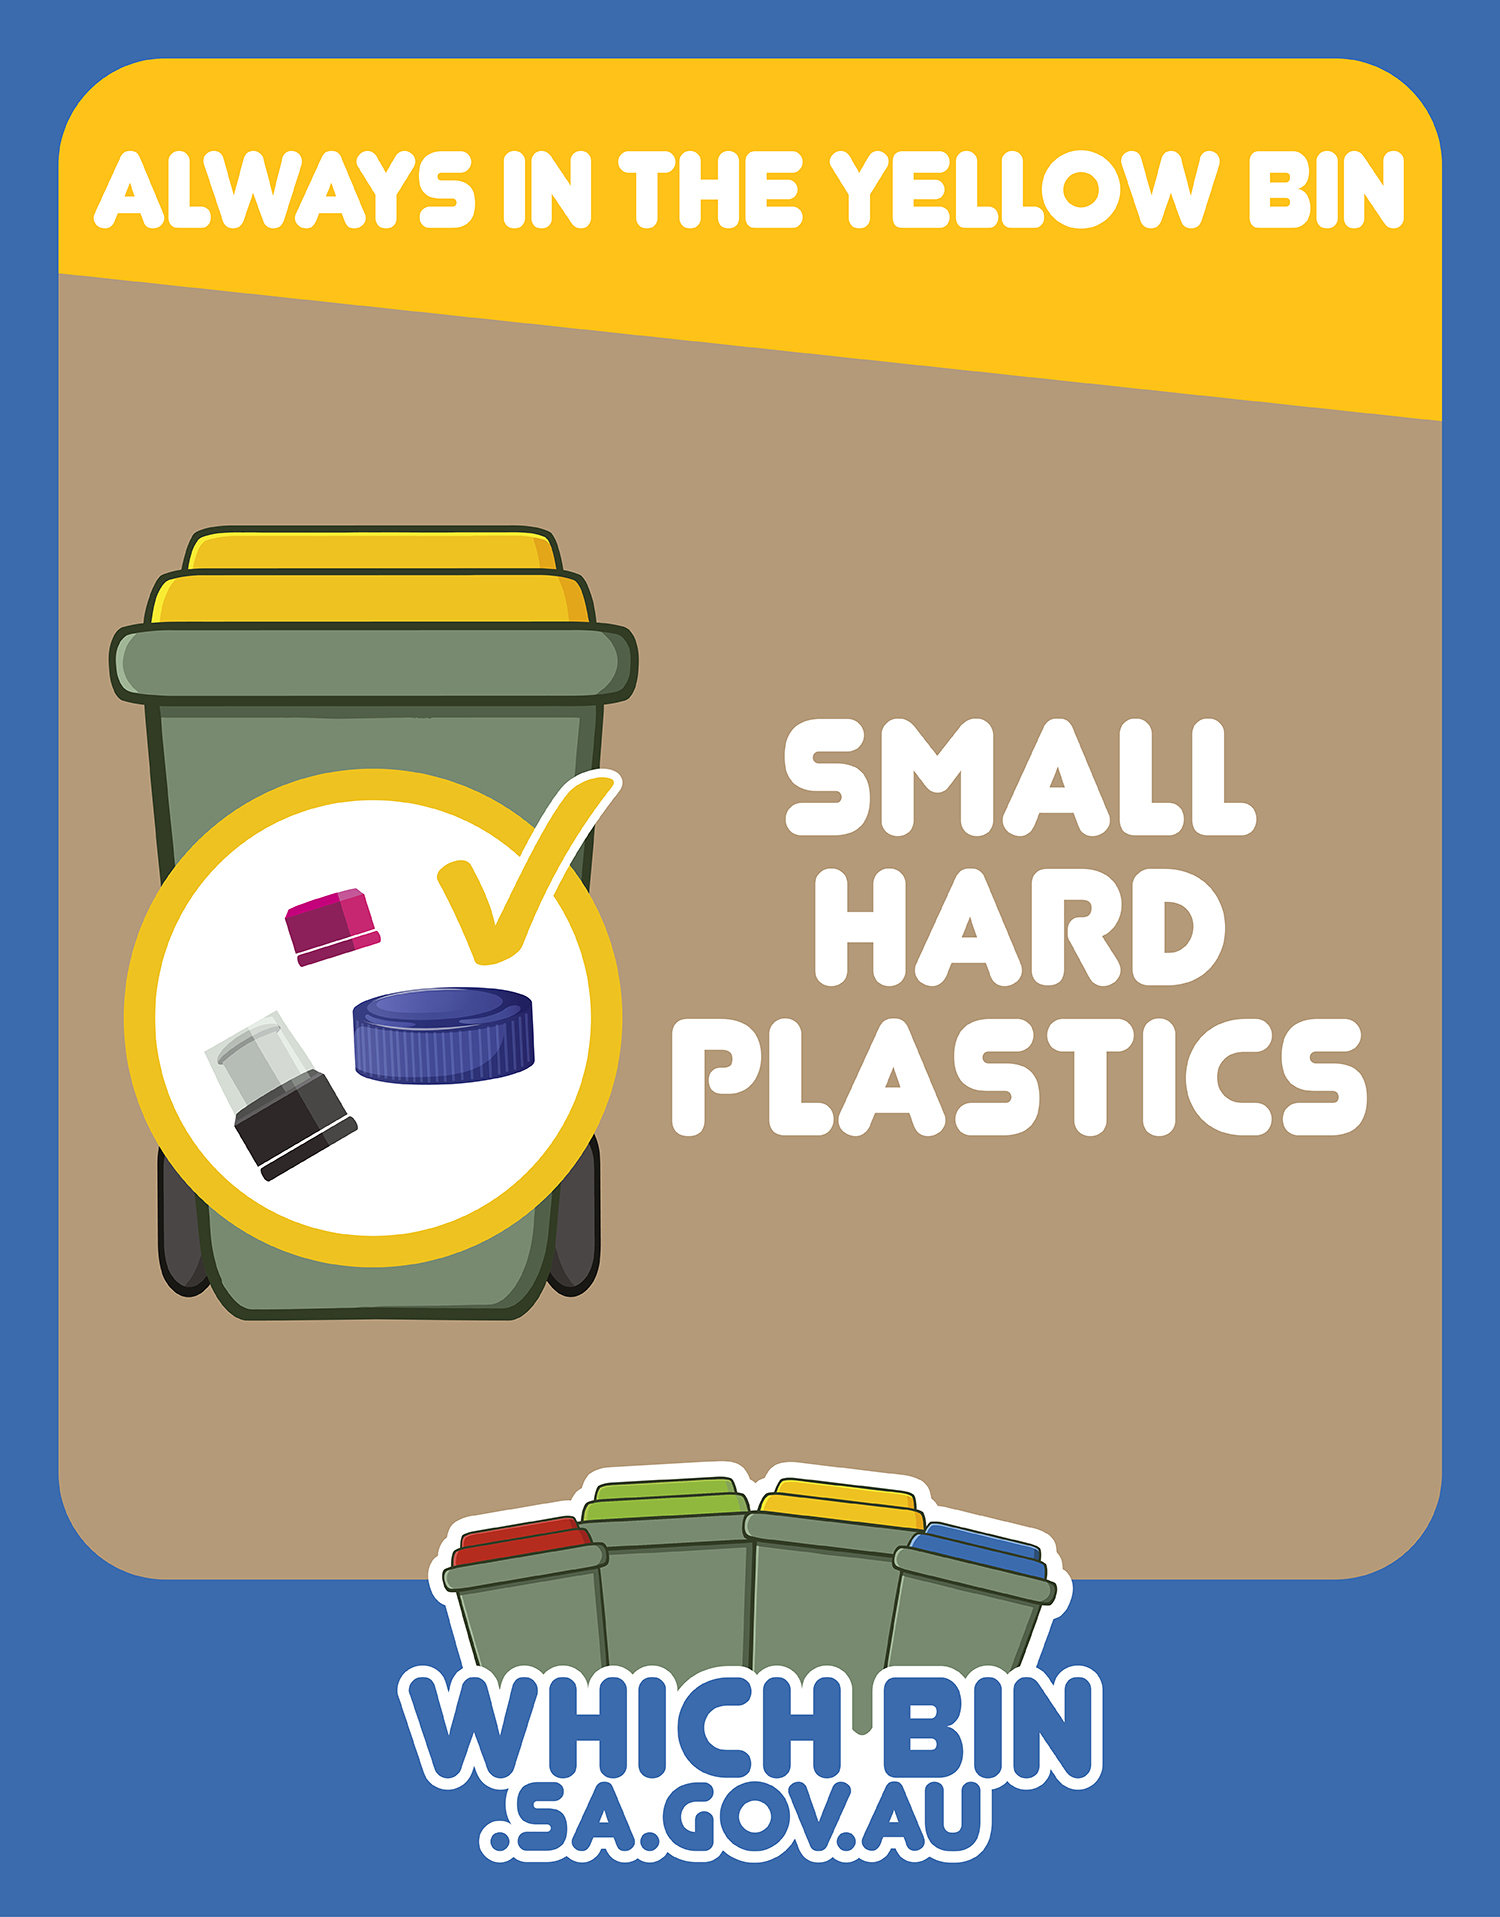 Always in the yellow bin: small hard plastics